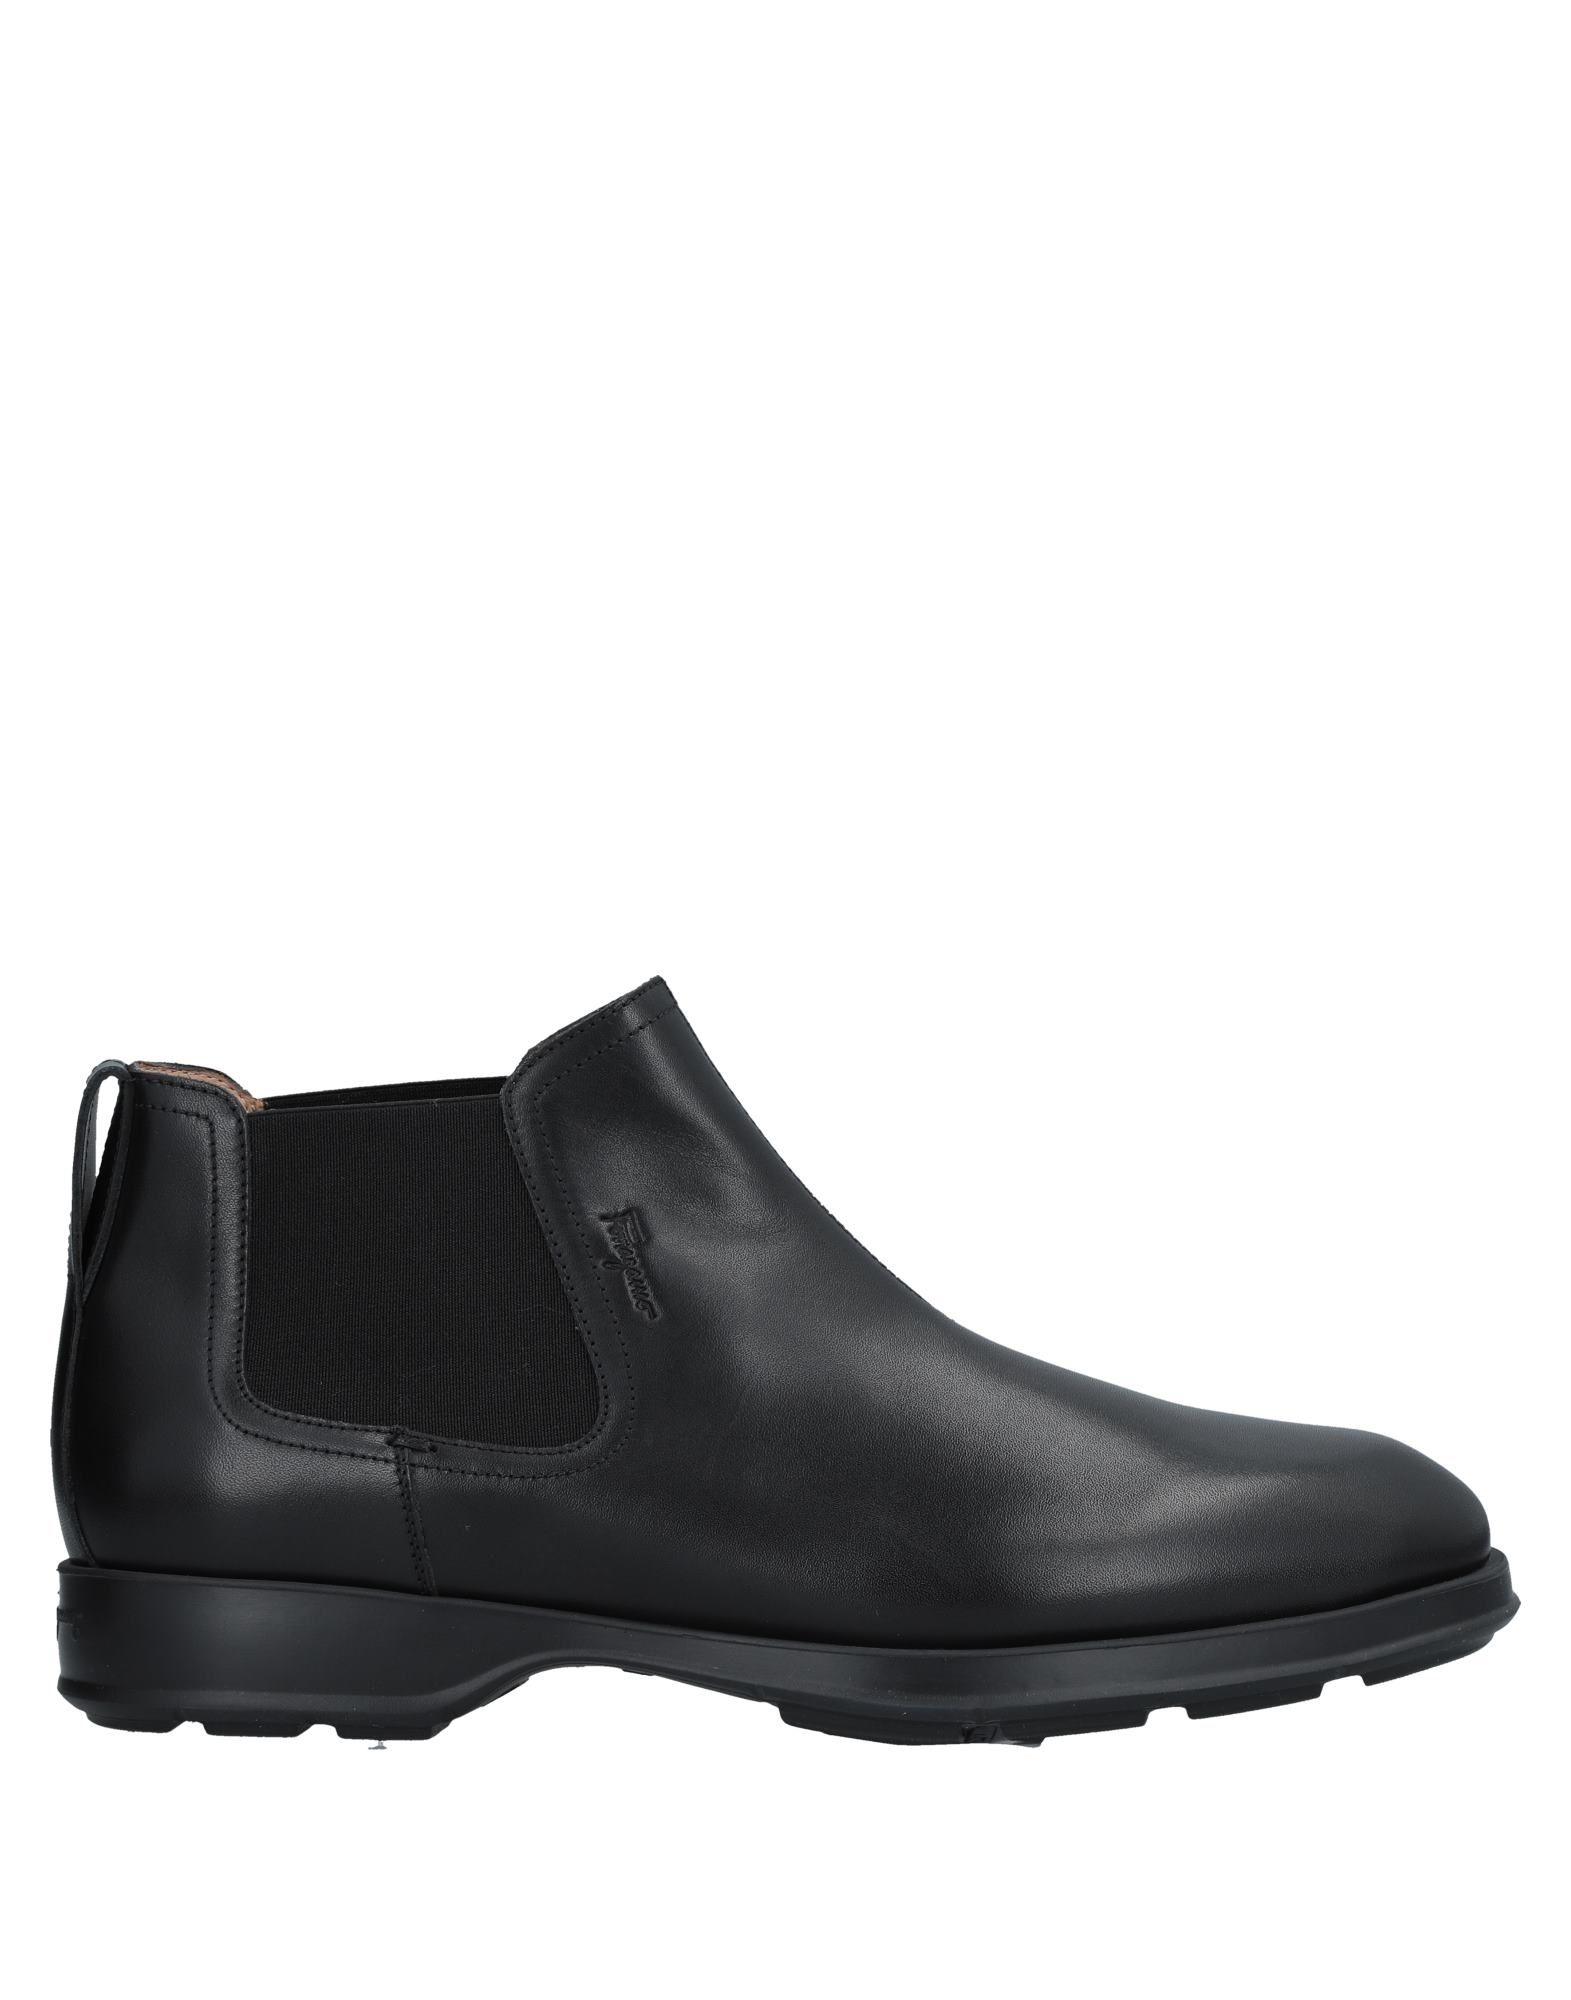 Salvatore Ferragamo Black Leather Ankle Boots | ModeSens